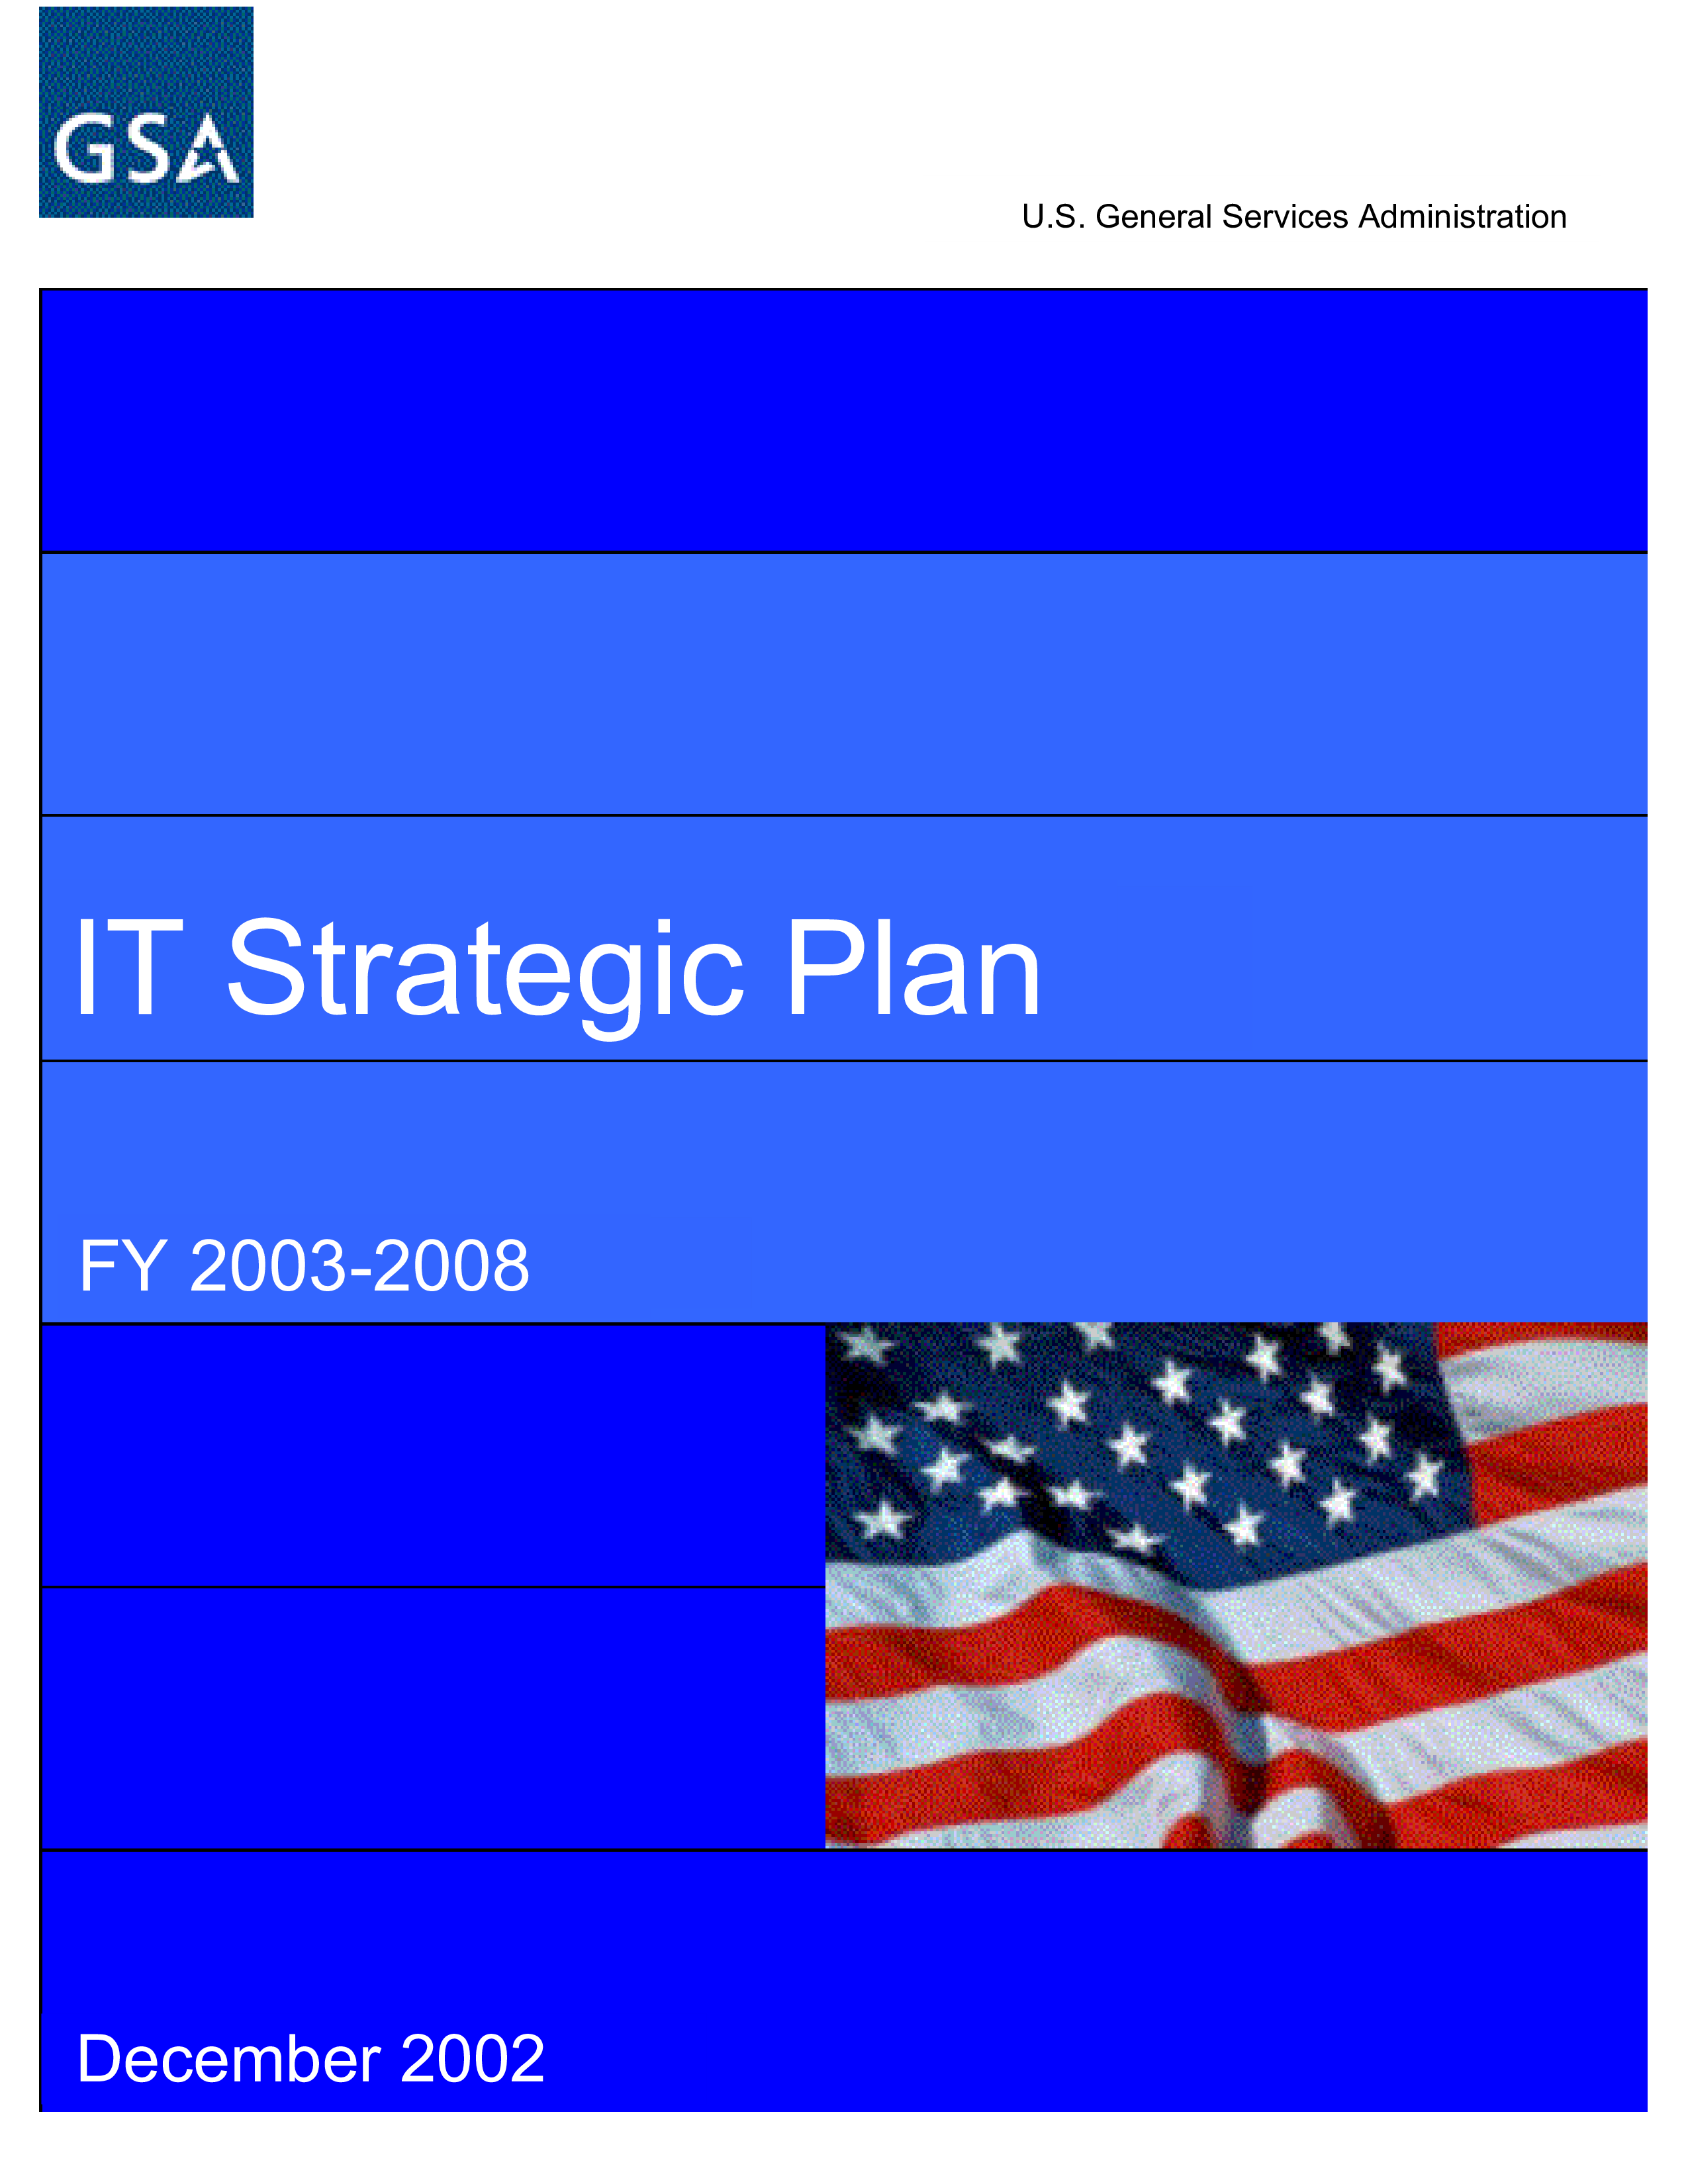 gsa strategic business plan